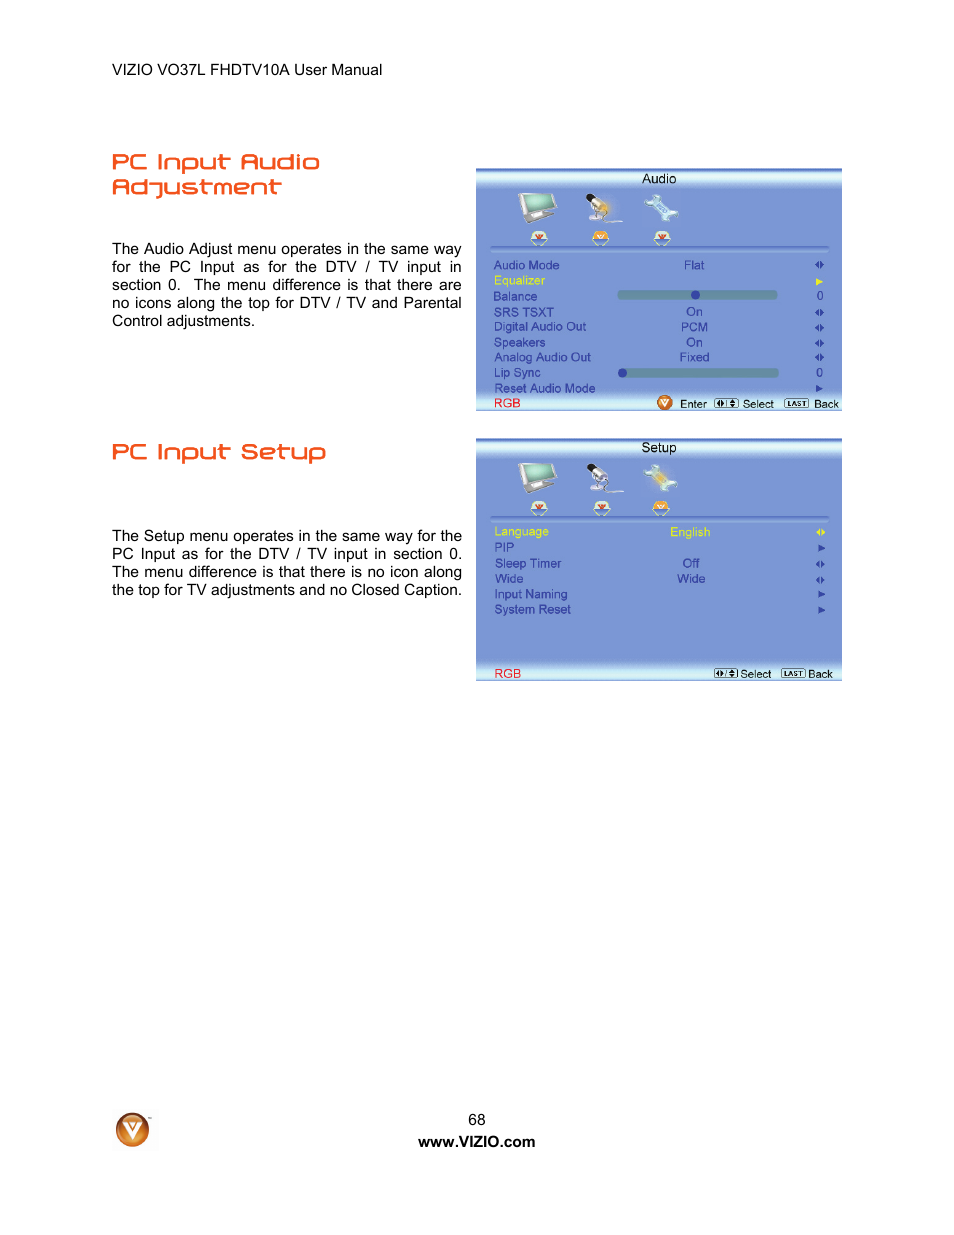 Pc input audio adjustment, Pc input setup | Vizio VO37L FHDTV10A User Manual | Page 68 / 80